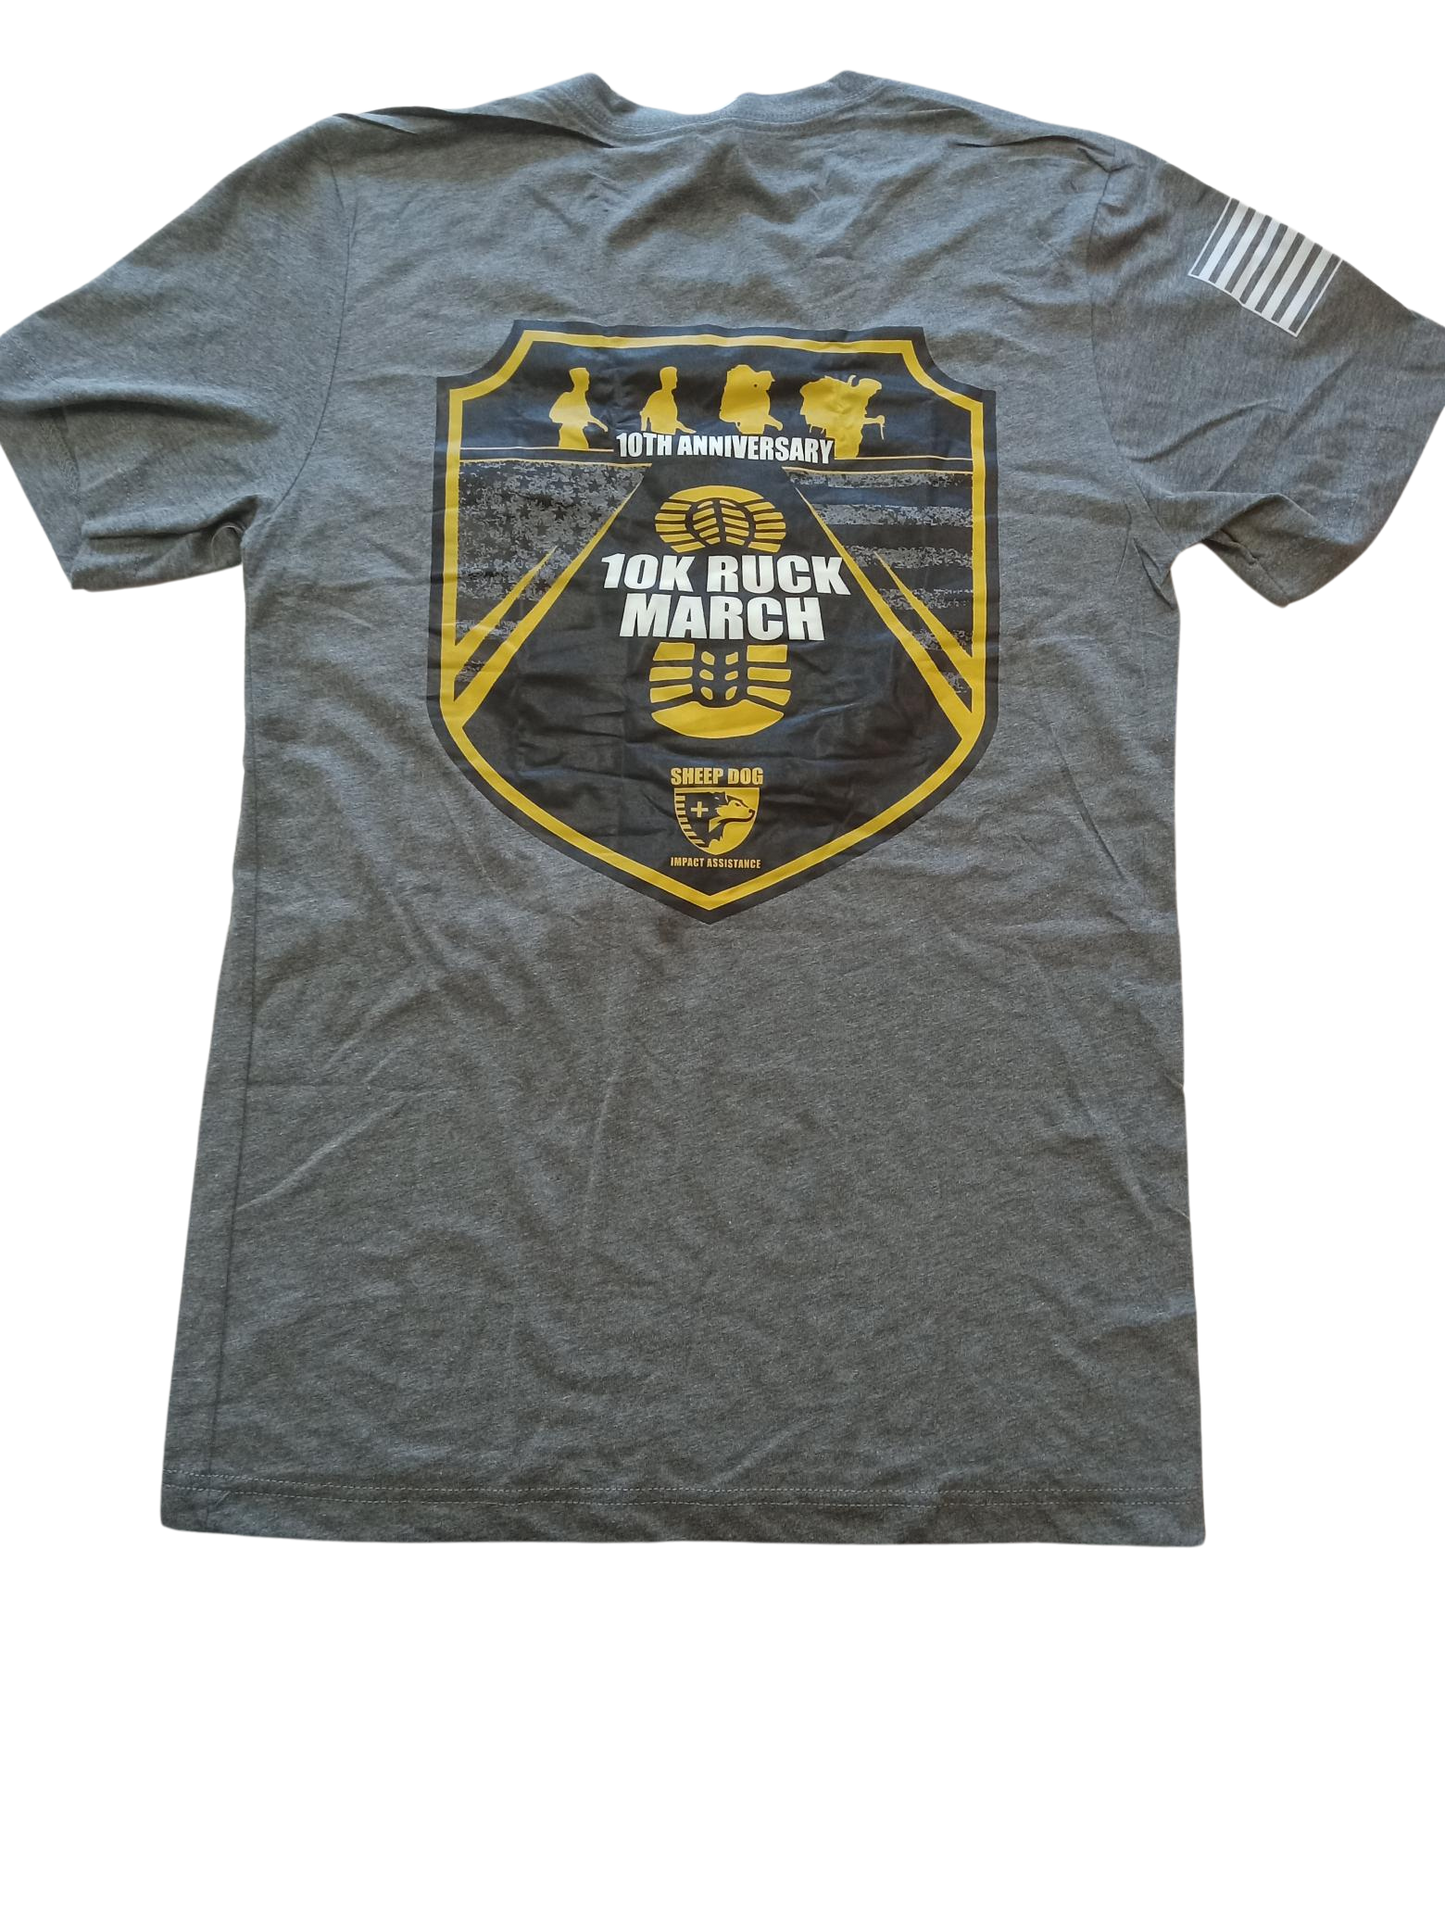 10th Anniversary 10K Ruck March T-shirt